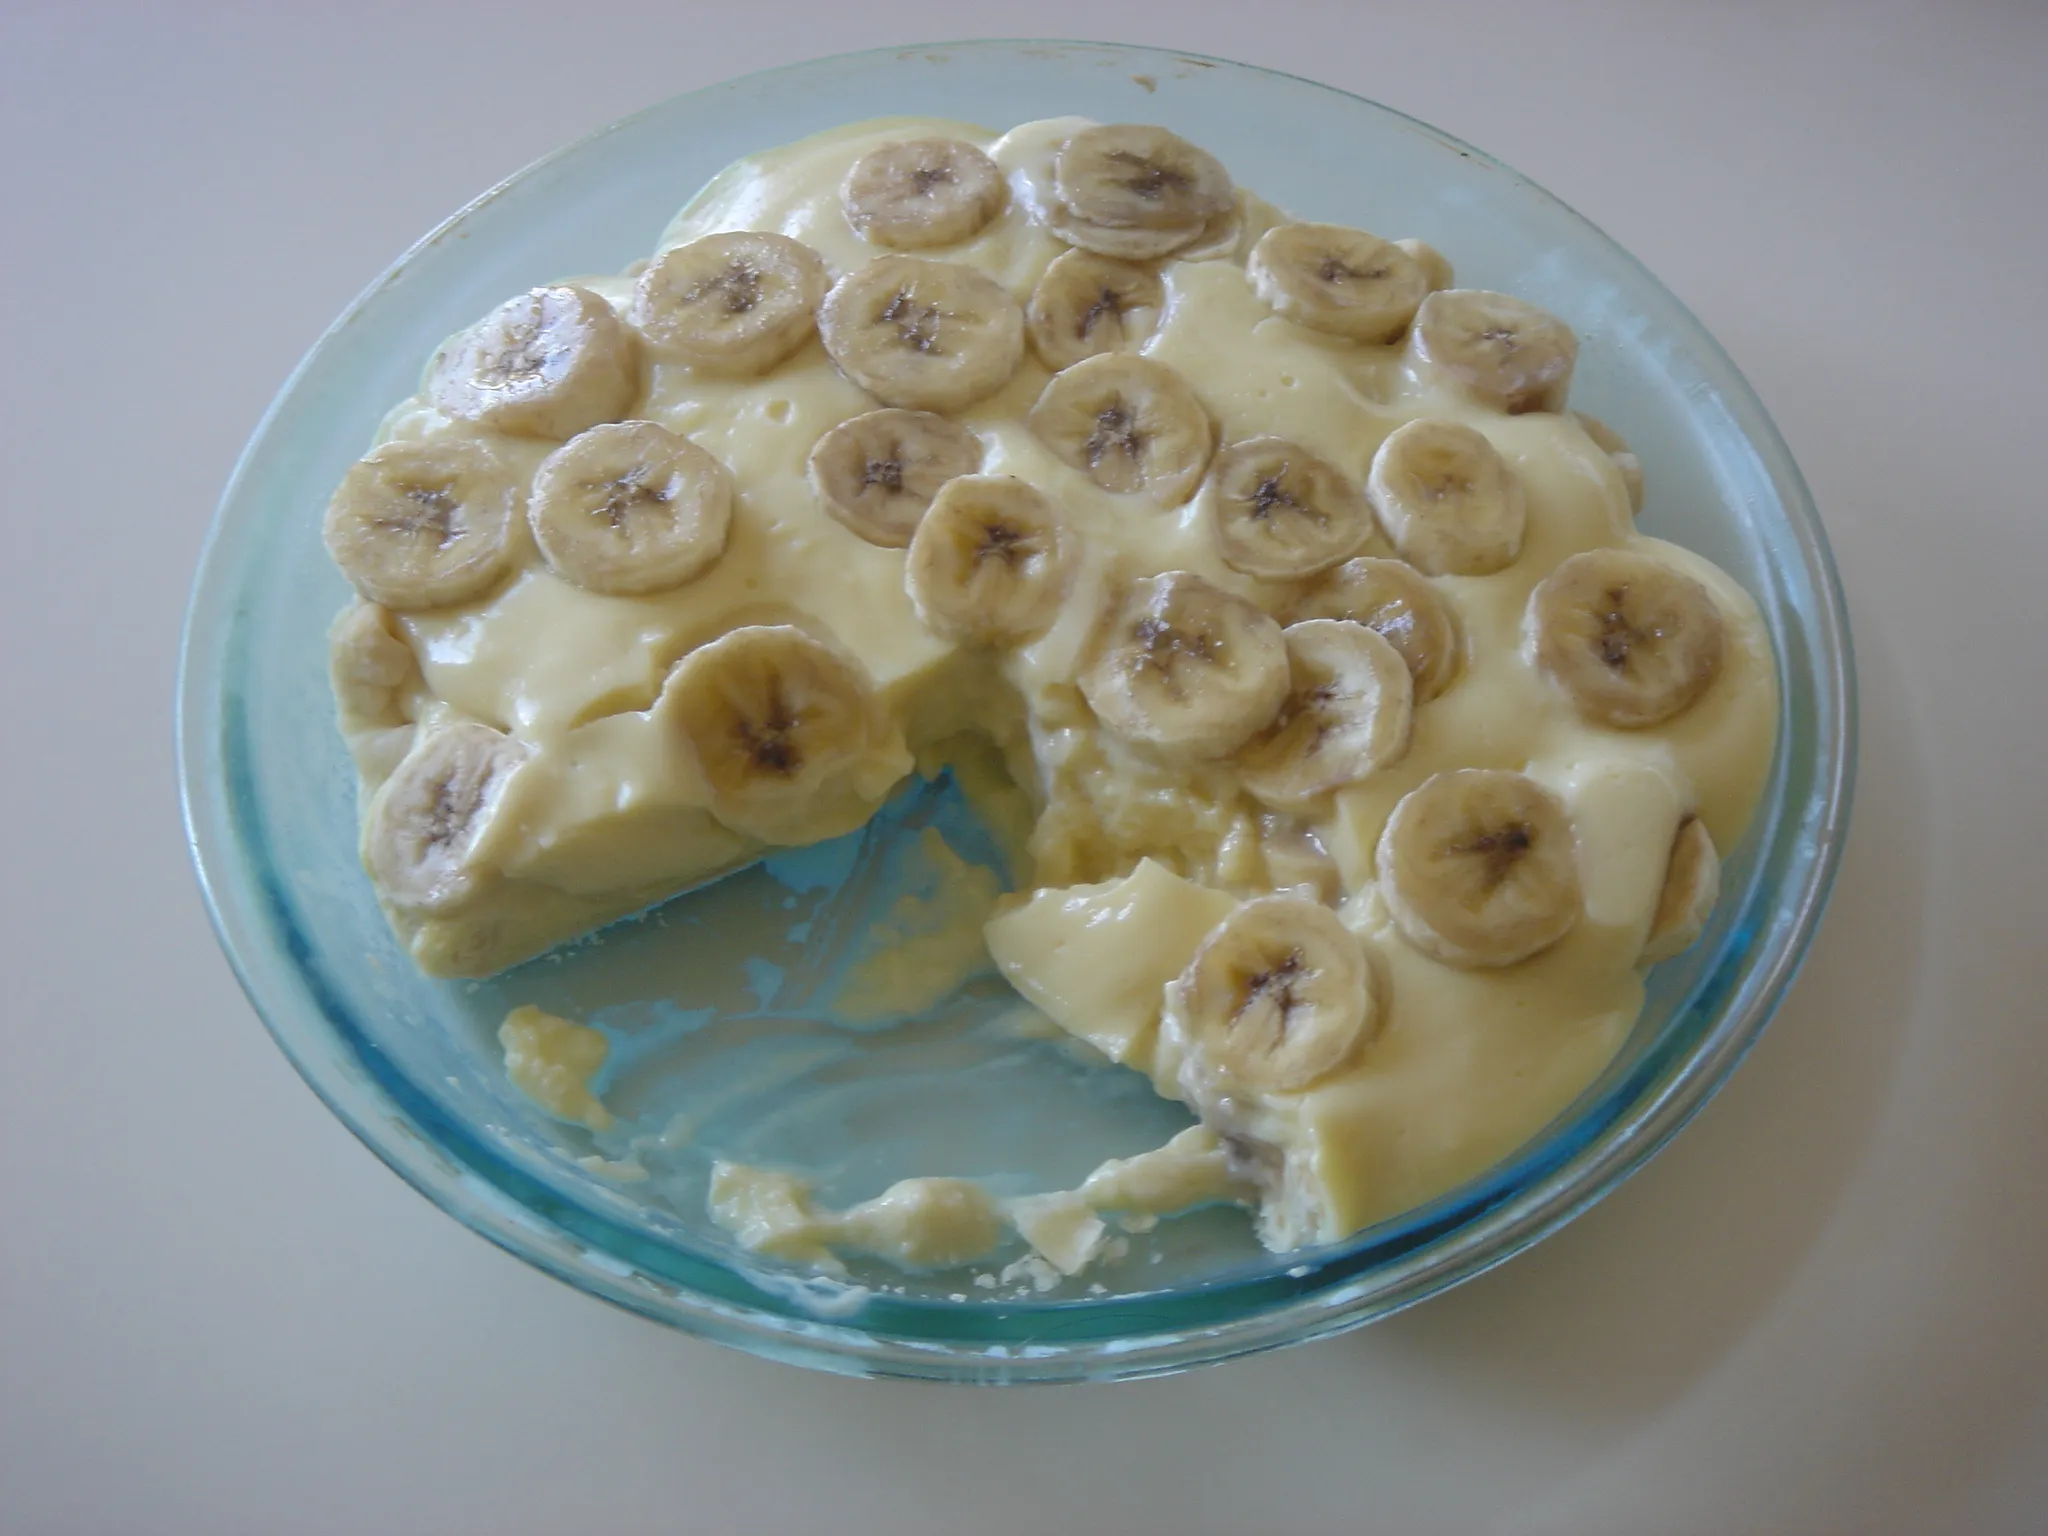 Delicious Banana Pudding Recipe without Bananas – Unique Twist